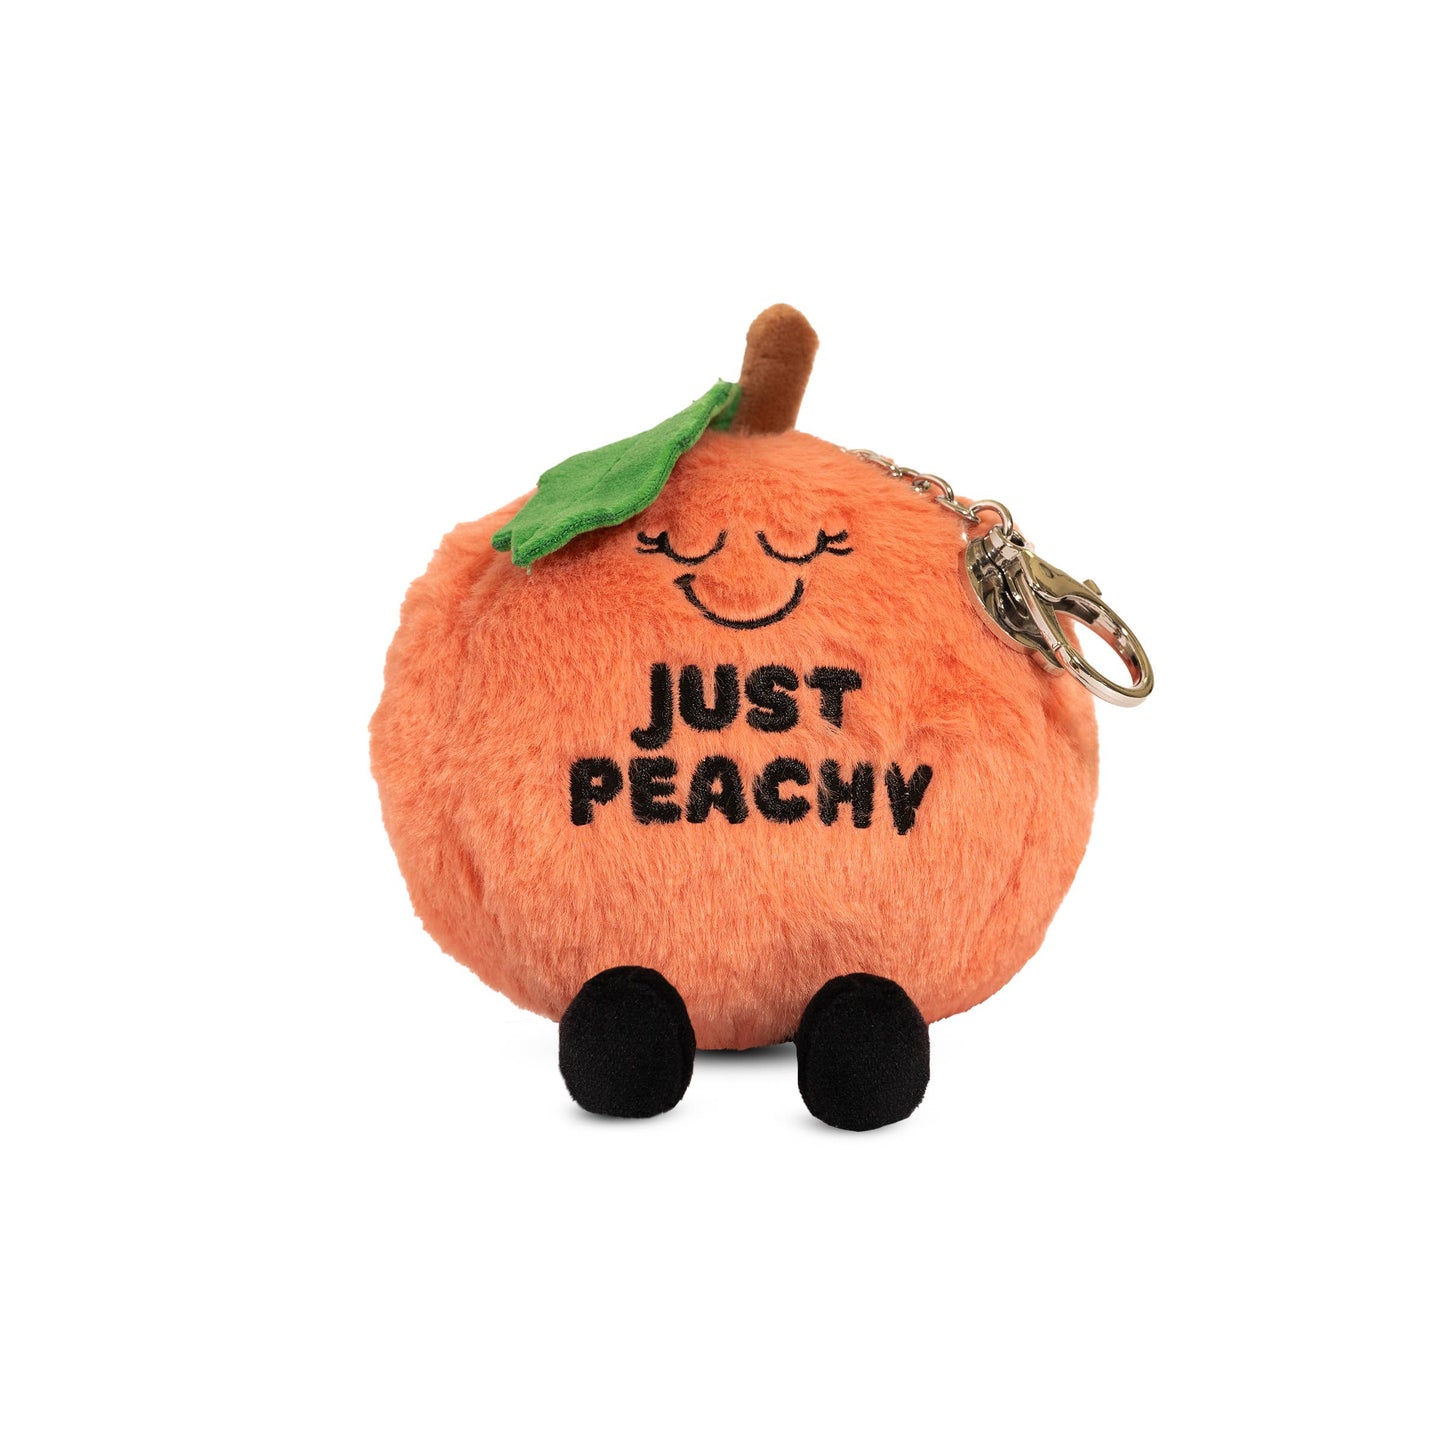 Punchkins Plush Keychain Cute Just Peachy